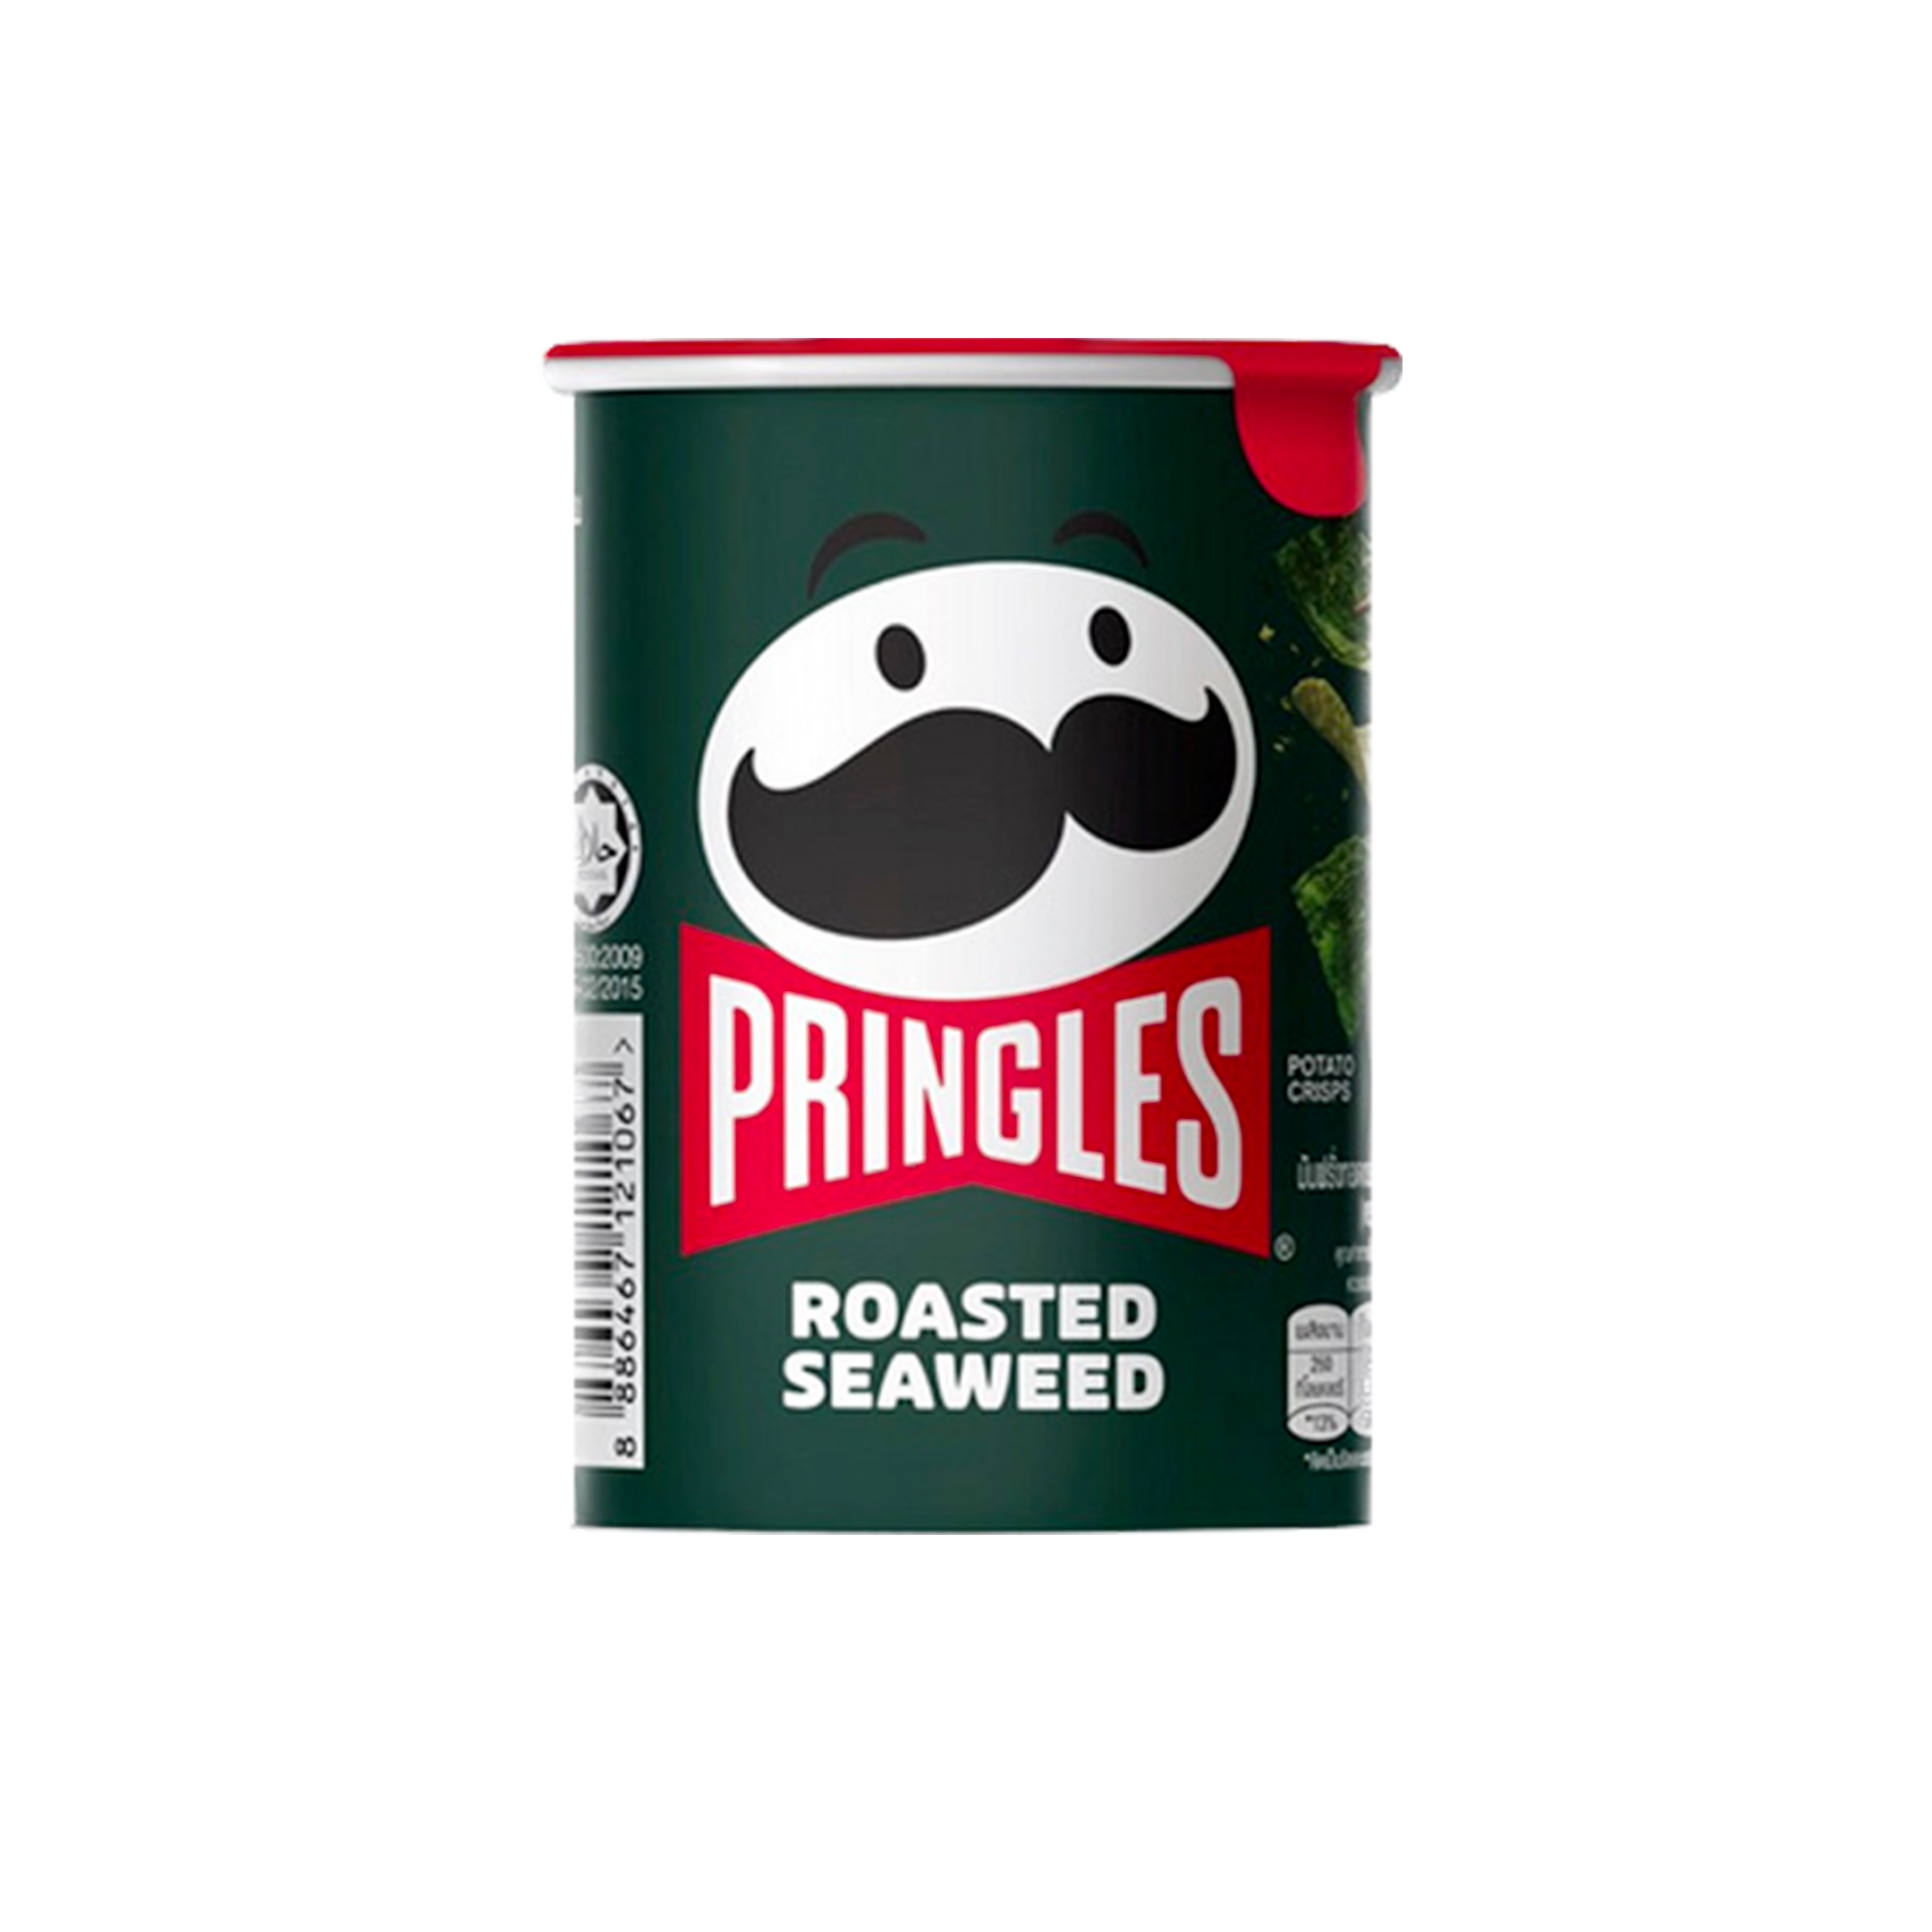 Pringles Roasted Seaweed 42g - Kellogg's – Snack Global